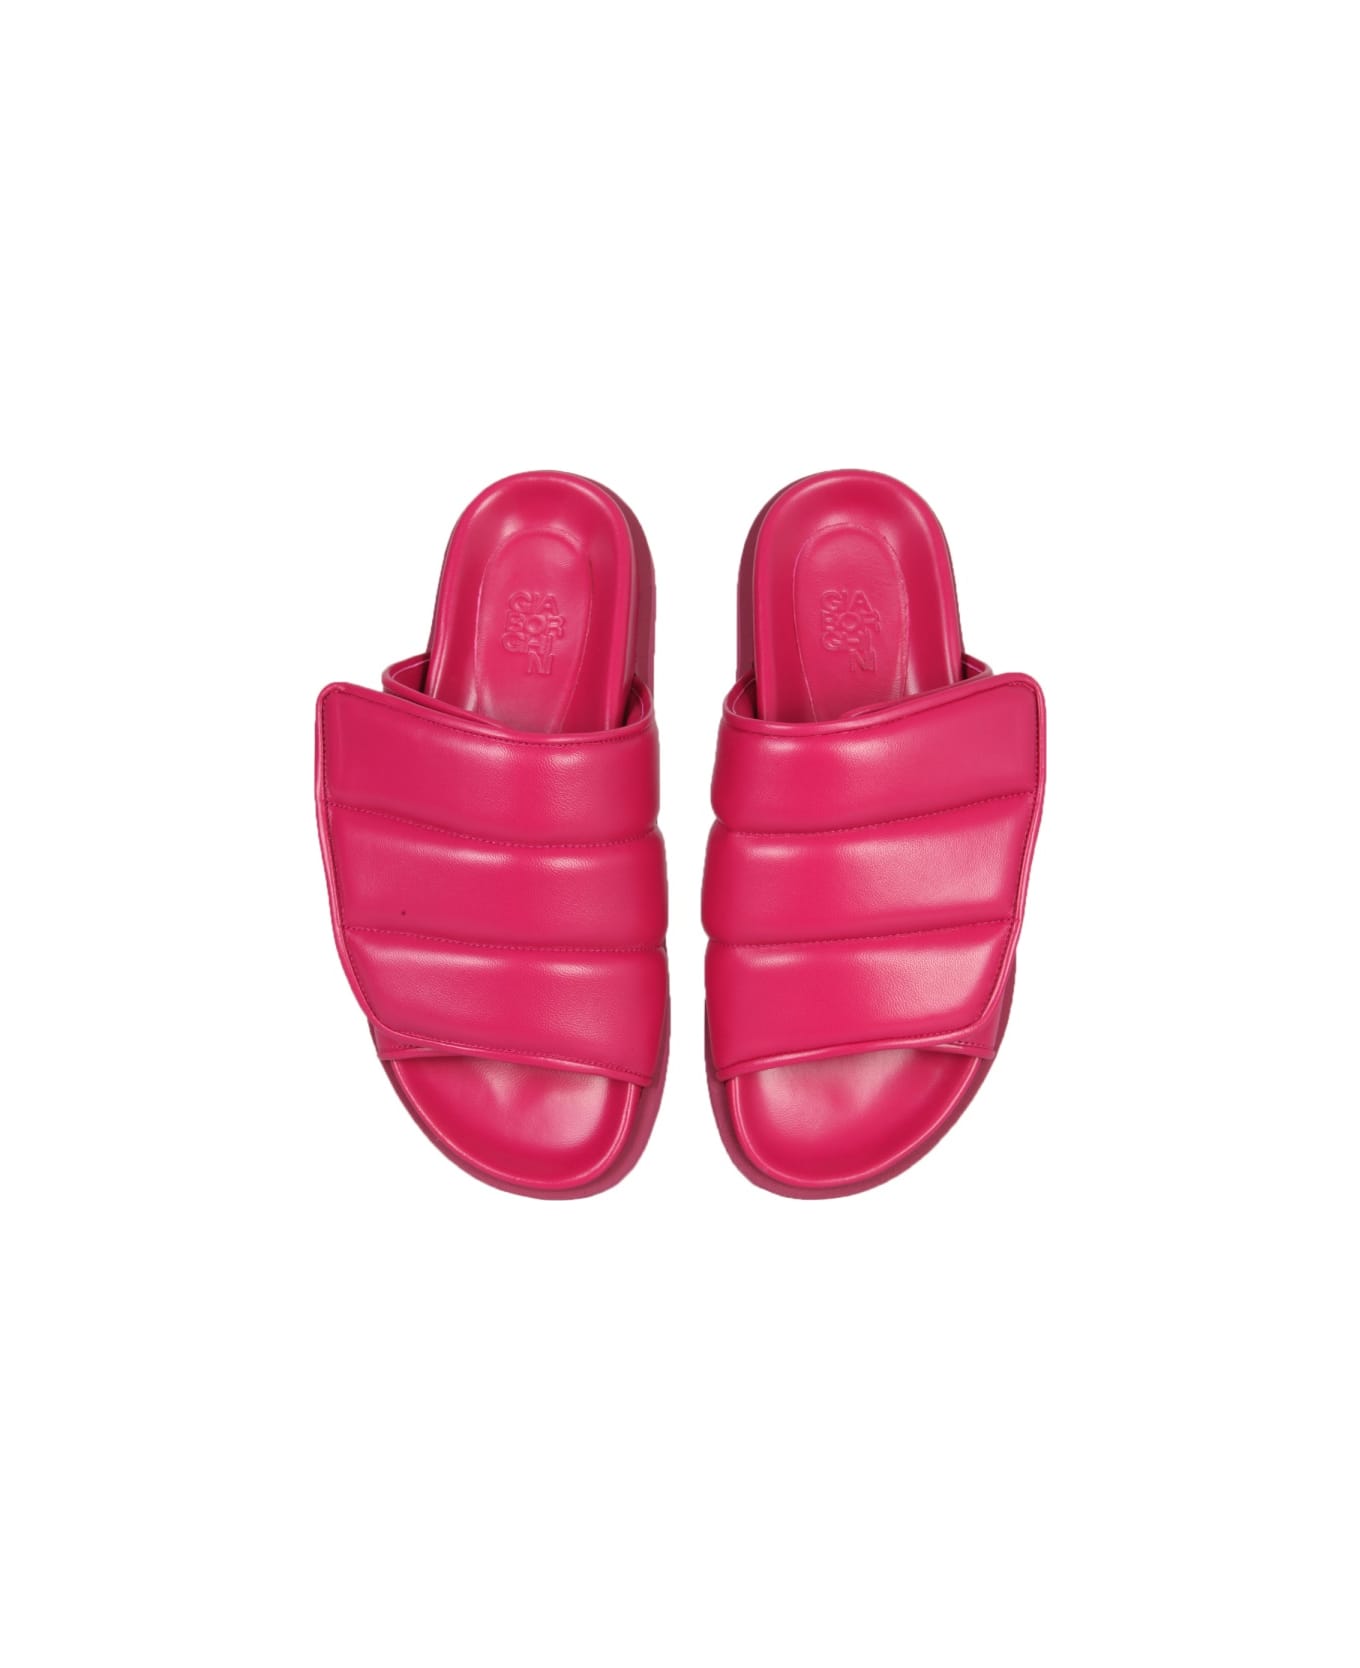 GIA BORGHINI Gia 3 Puffy Sandals - FUCHSIA フラットシューズ